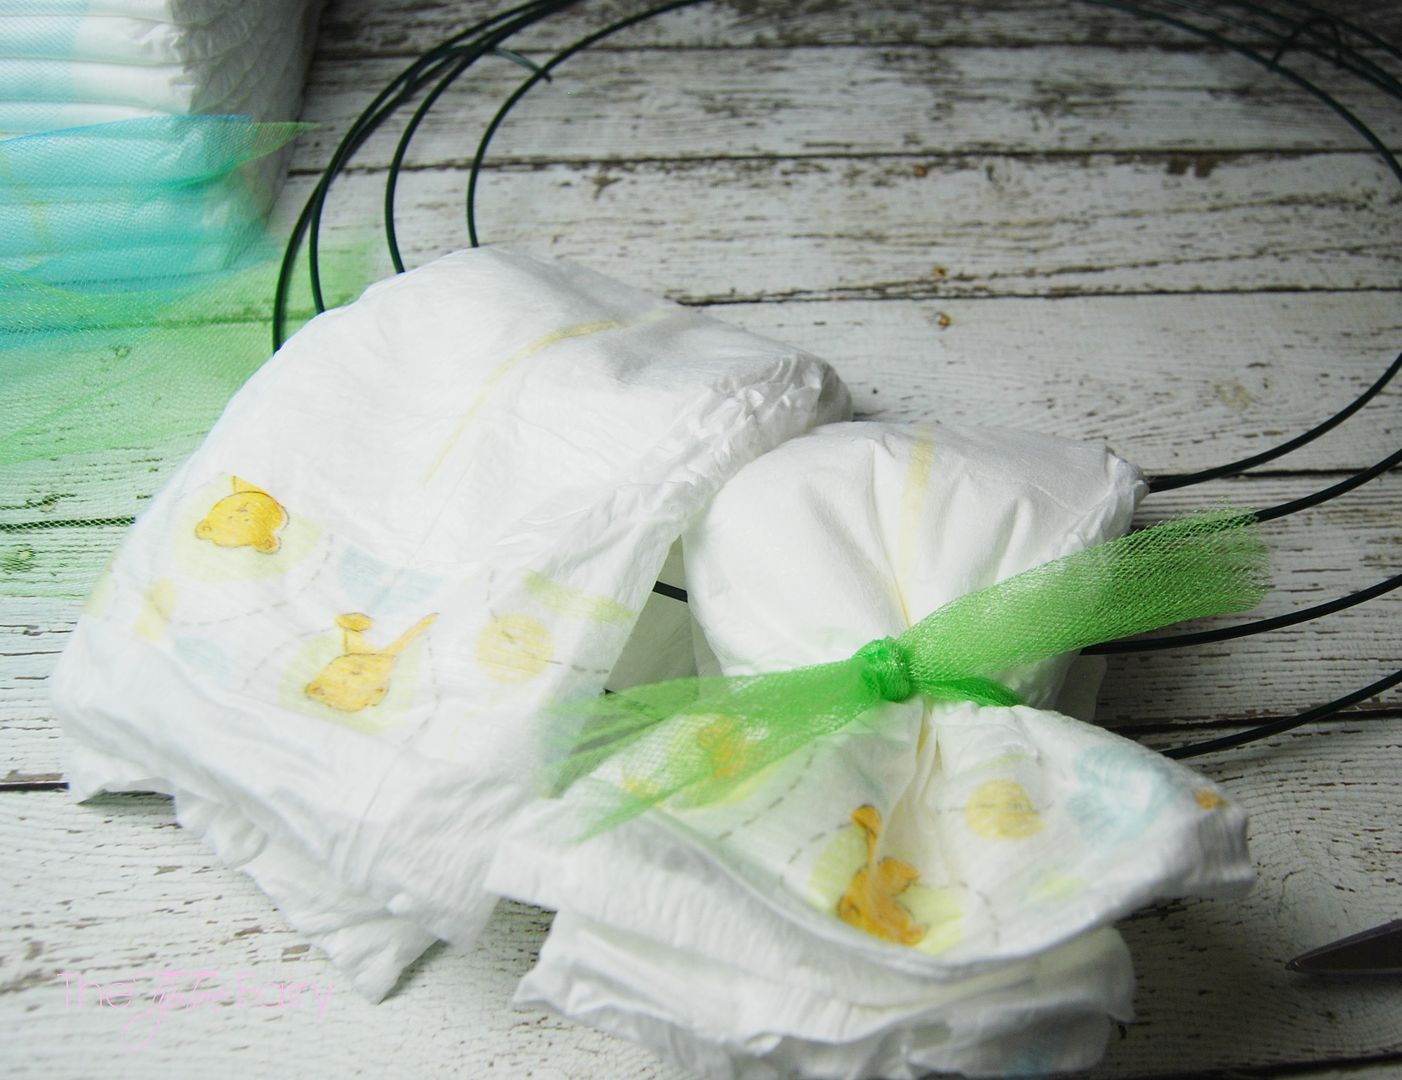 Baby Diapers Wreath Tutorial | The TipToe Fairy #BabyDiapersSavings #CollectiveBias #shop #diaperwreath #babygift #tutorial